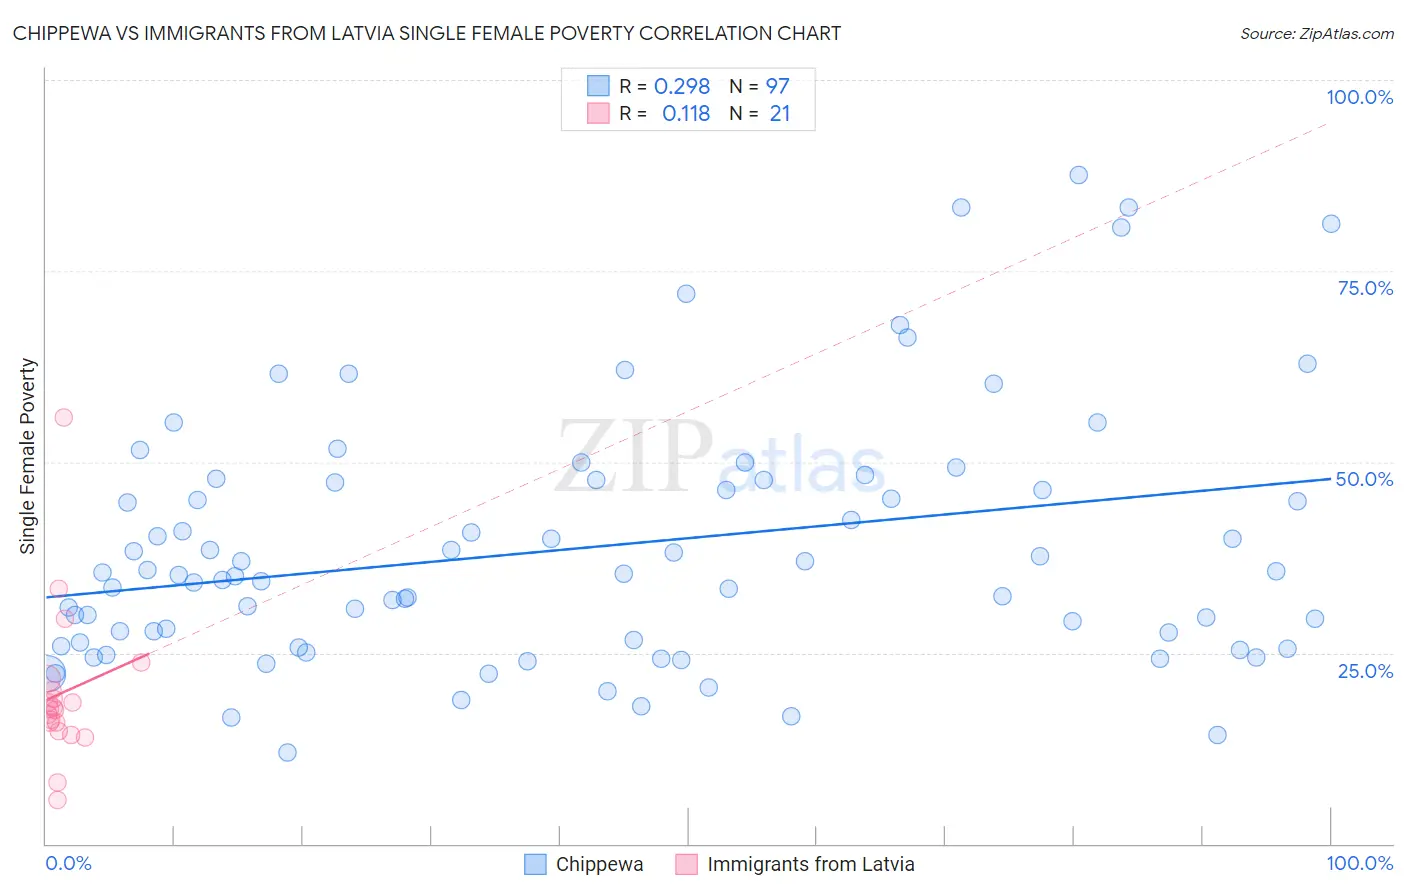 Chippewa vs Immigrants from Latvia Single Female Poverty